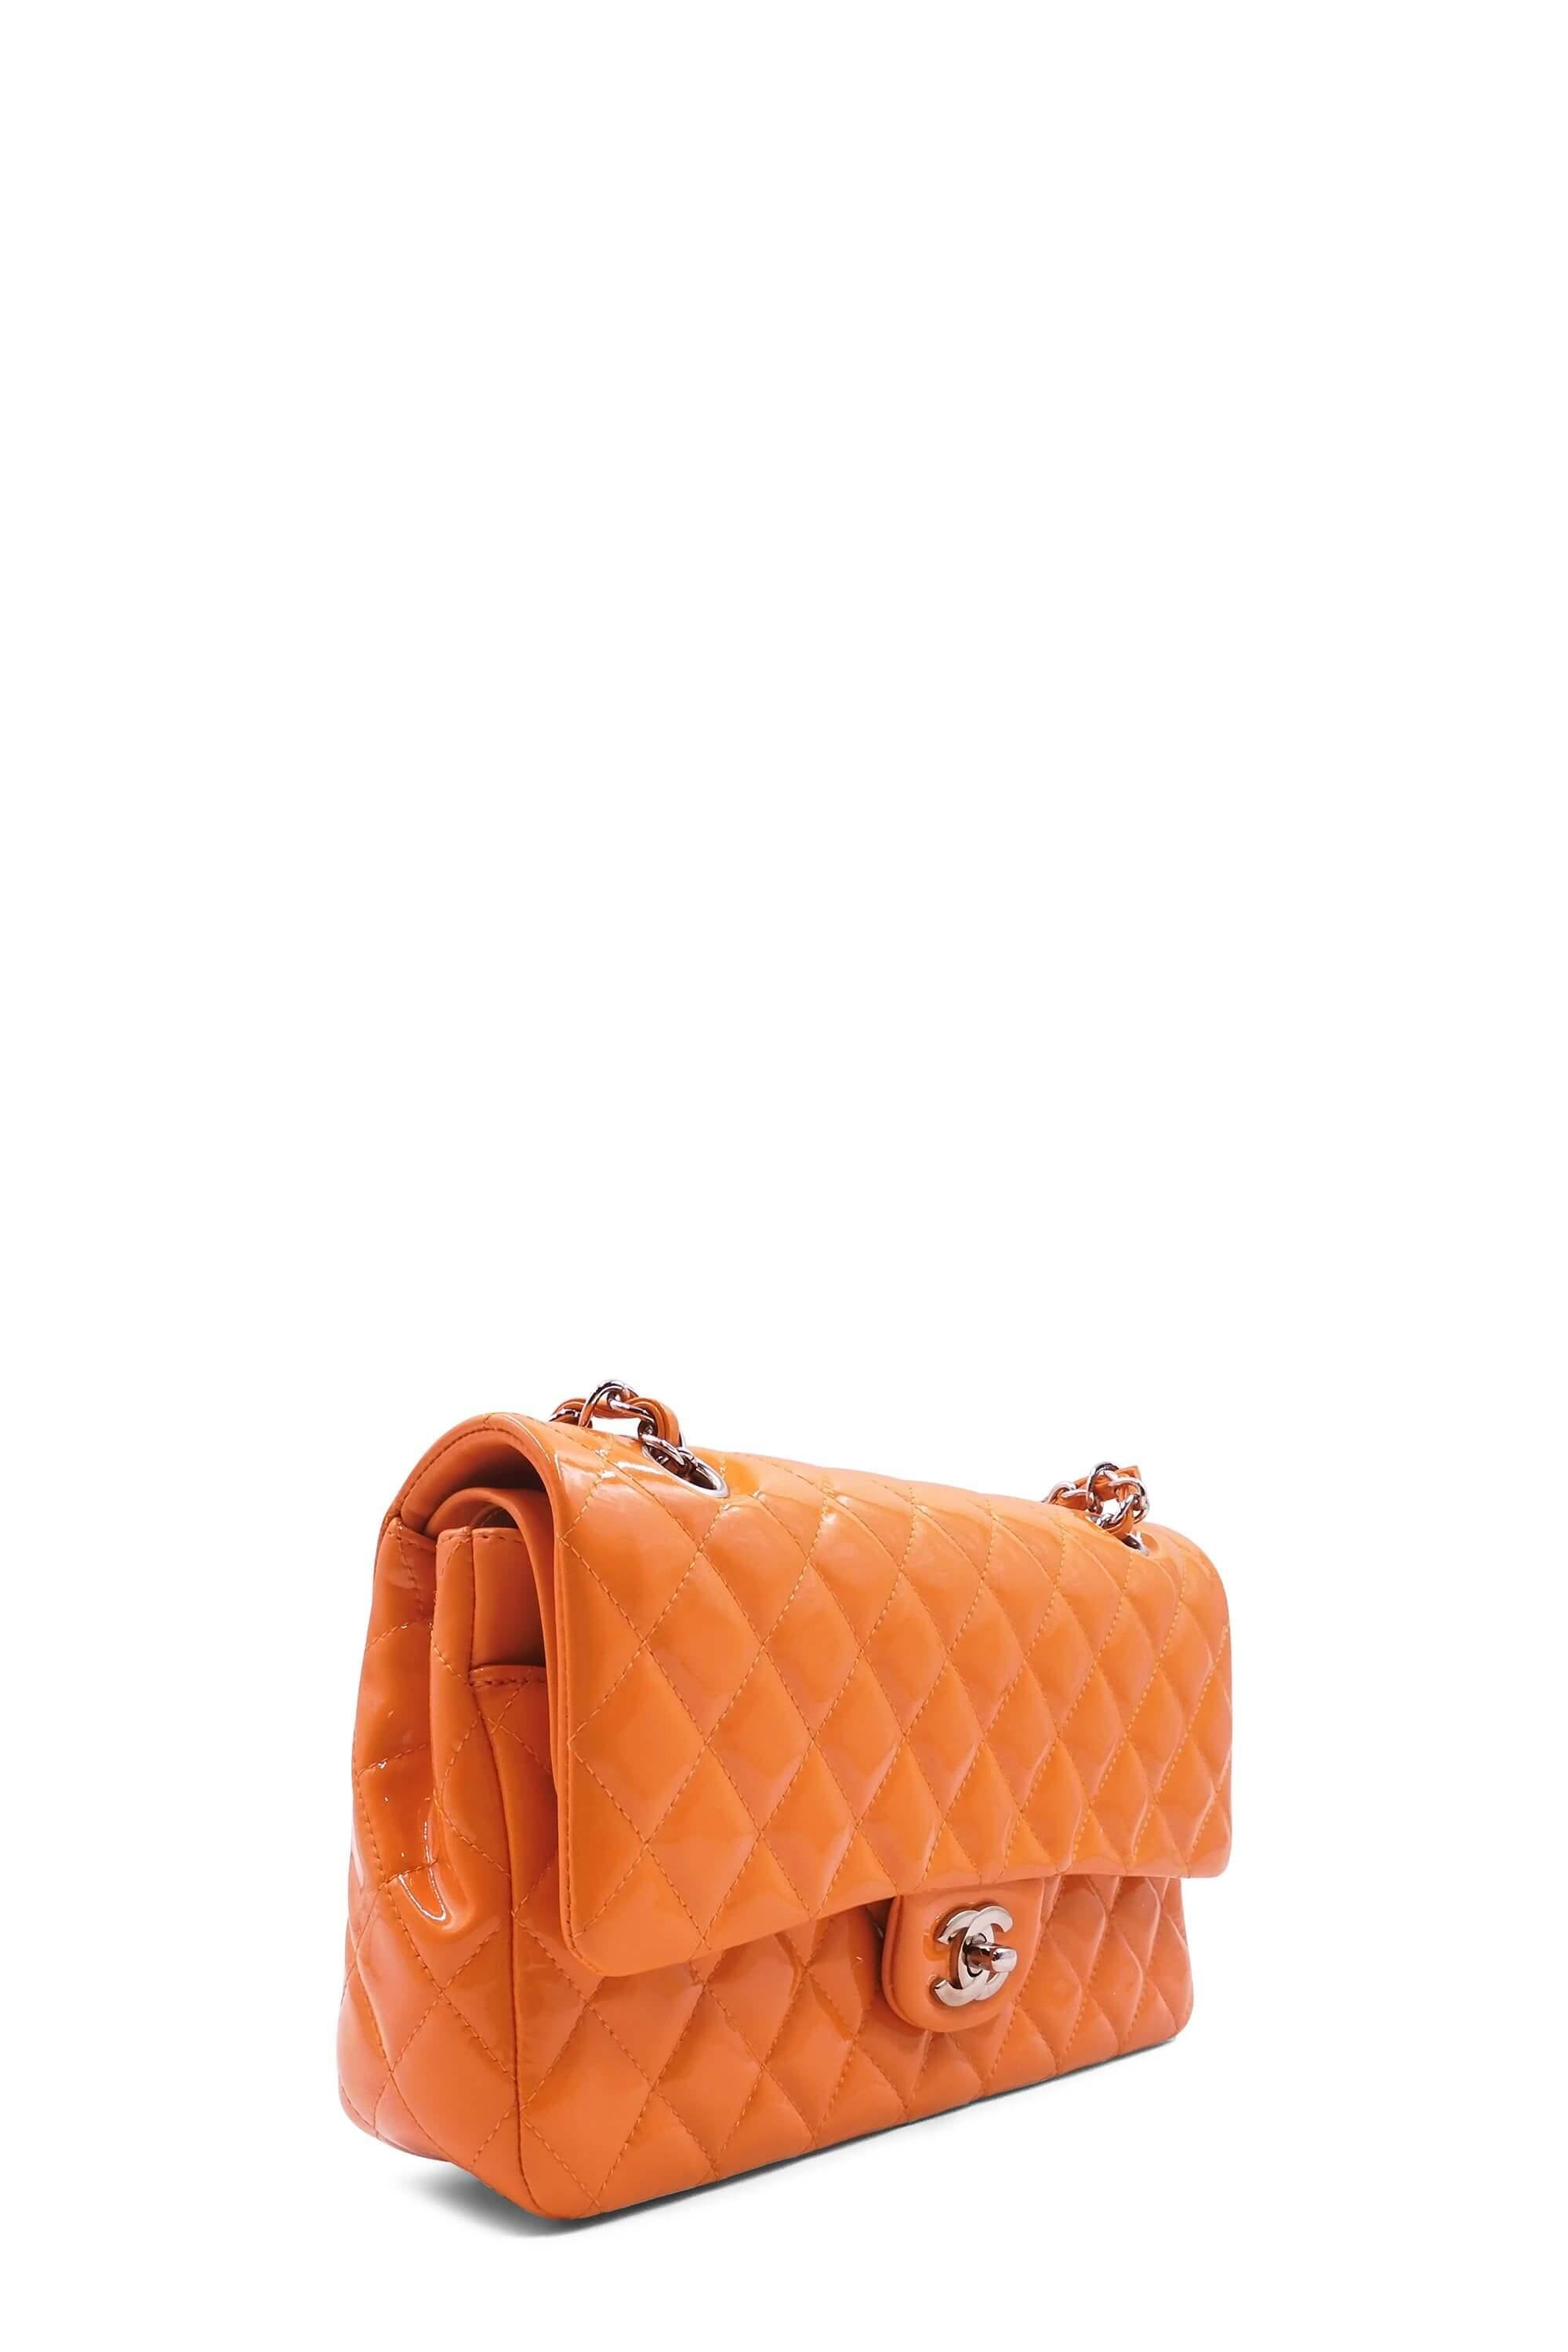 Lambskin  GoldTone Metal Orange Mini Flap Bag  CHANEL  Bags Chanel  flap bag Chanel clutch bag